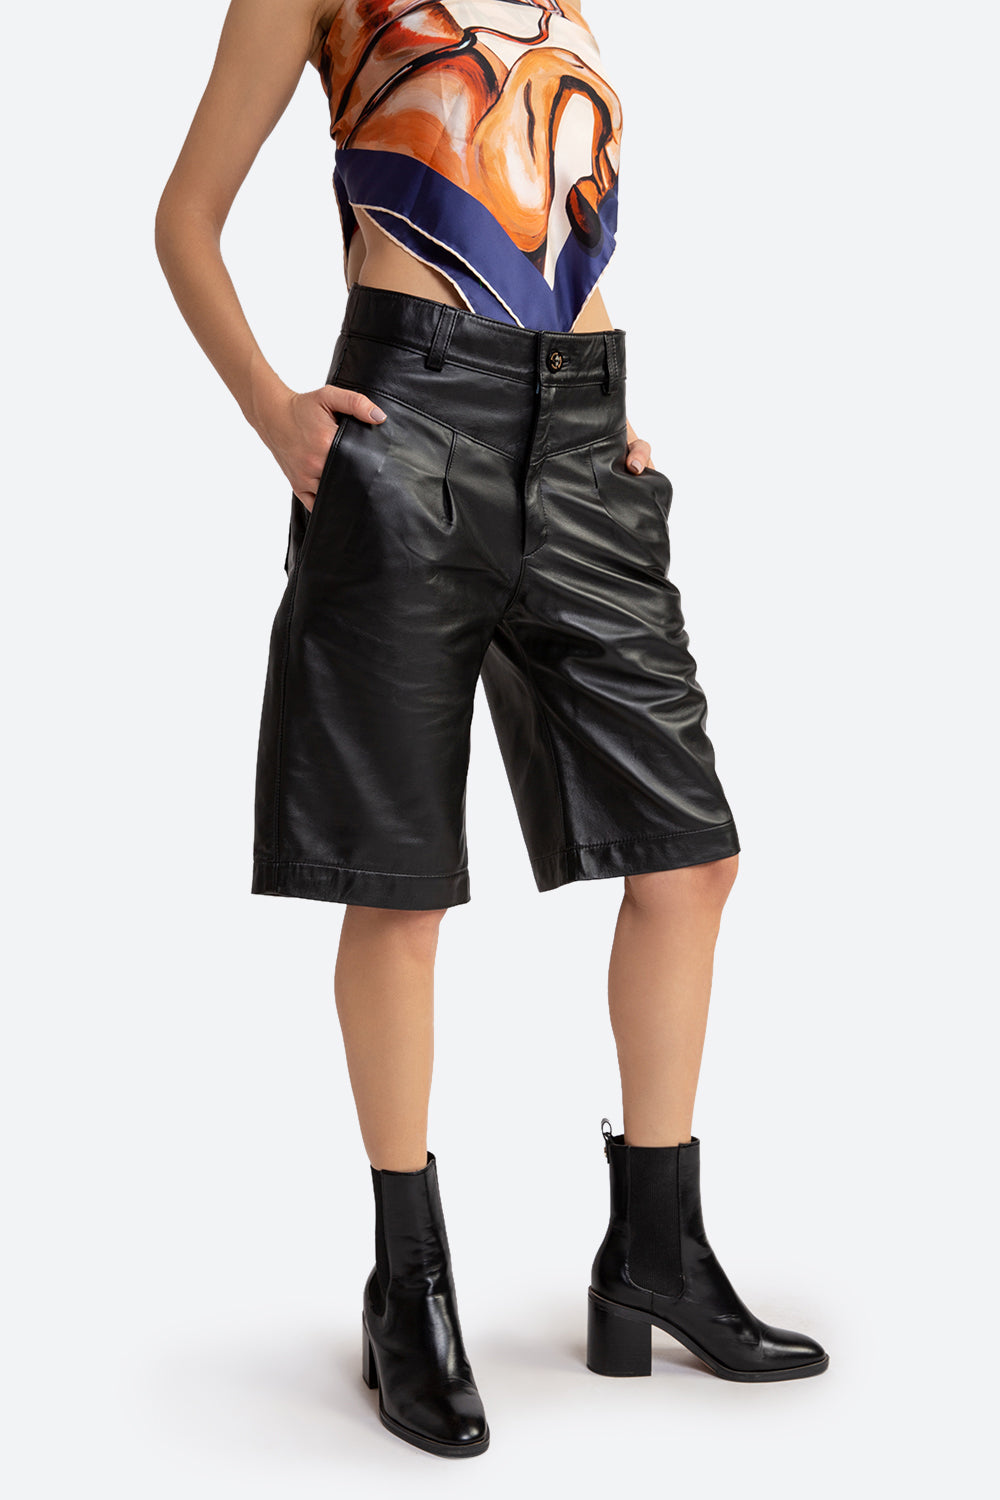 Iris Leather Bermuda Shorts in Black